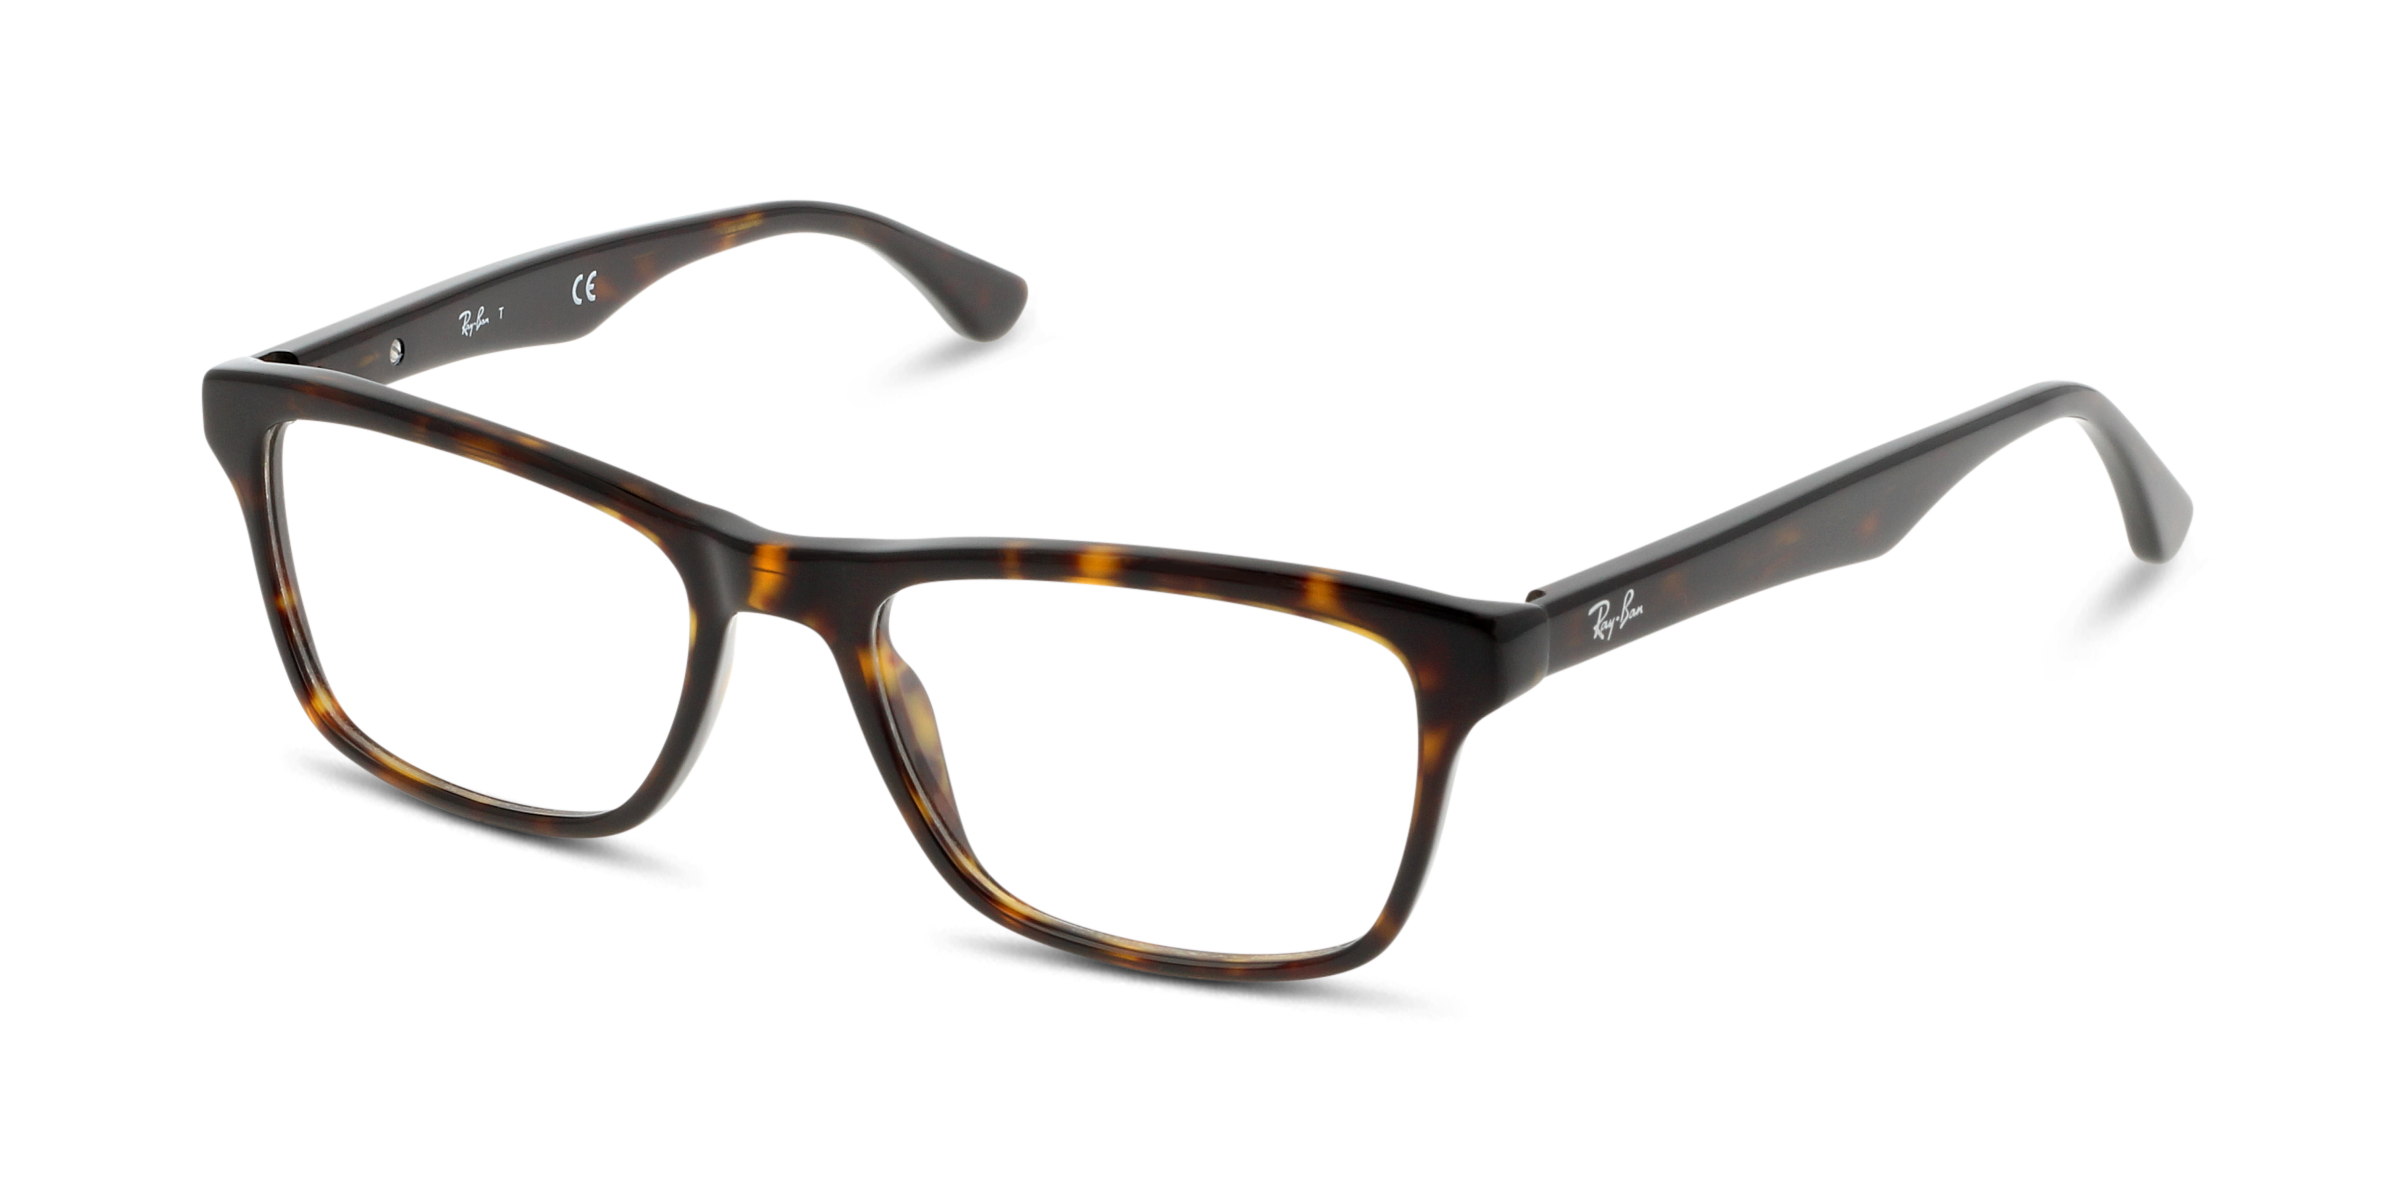 Angle_Left01 Ray-Ban RX 5279 Glasses Transparent / Transparent, Black